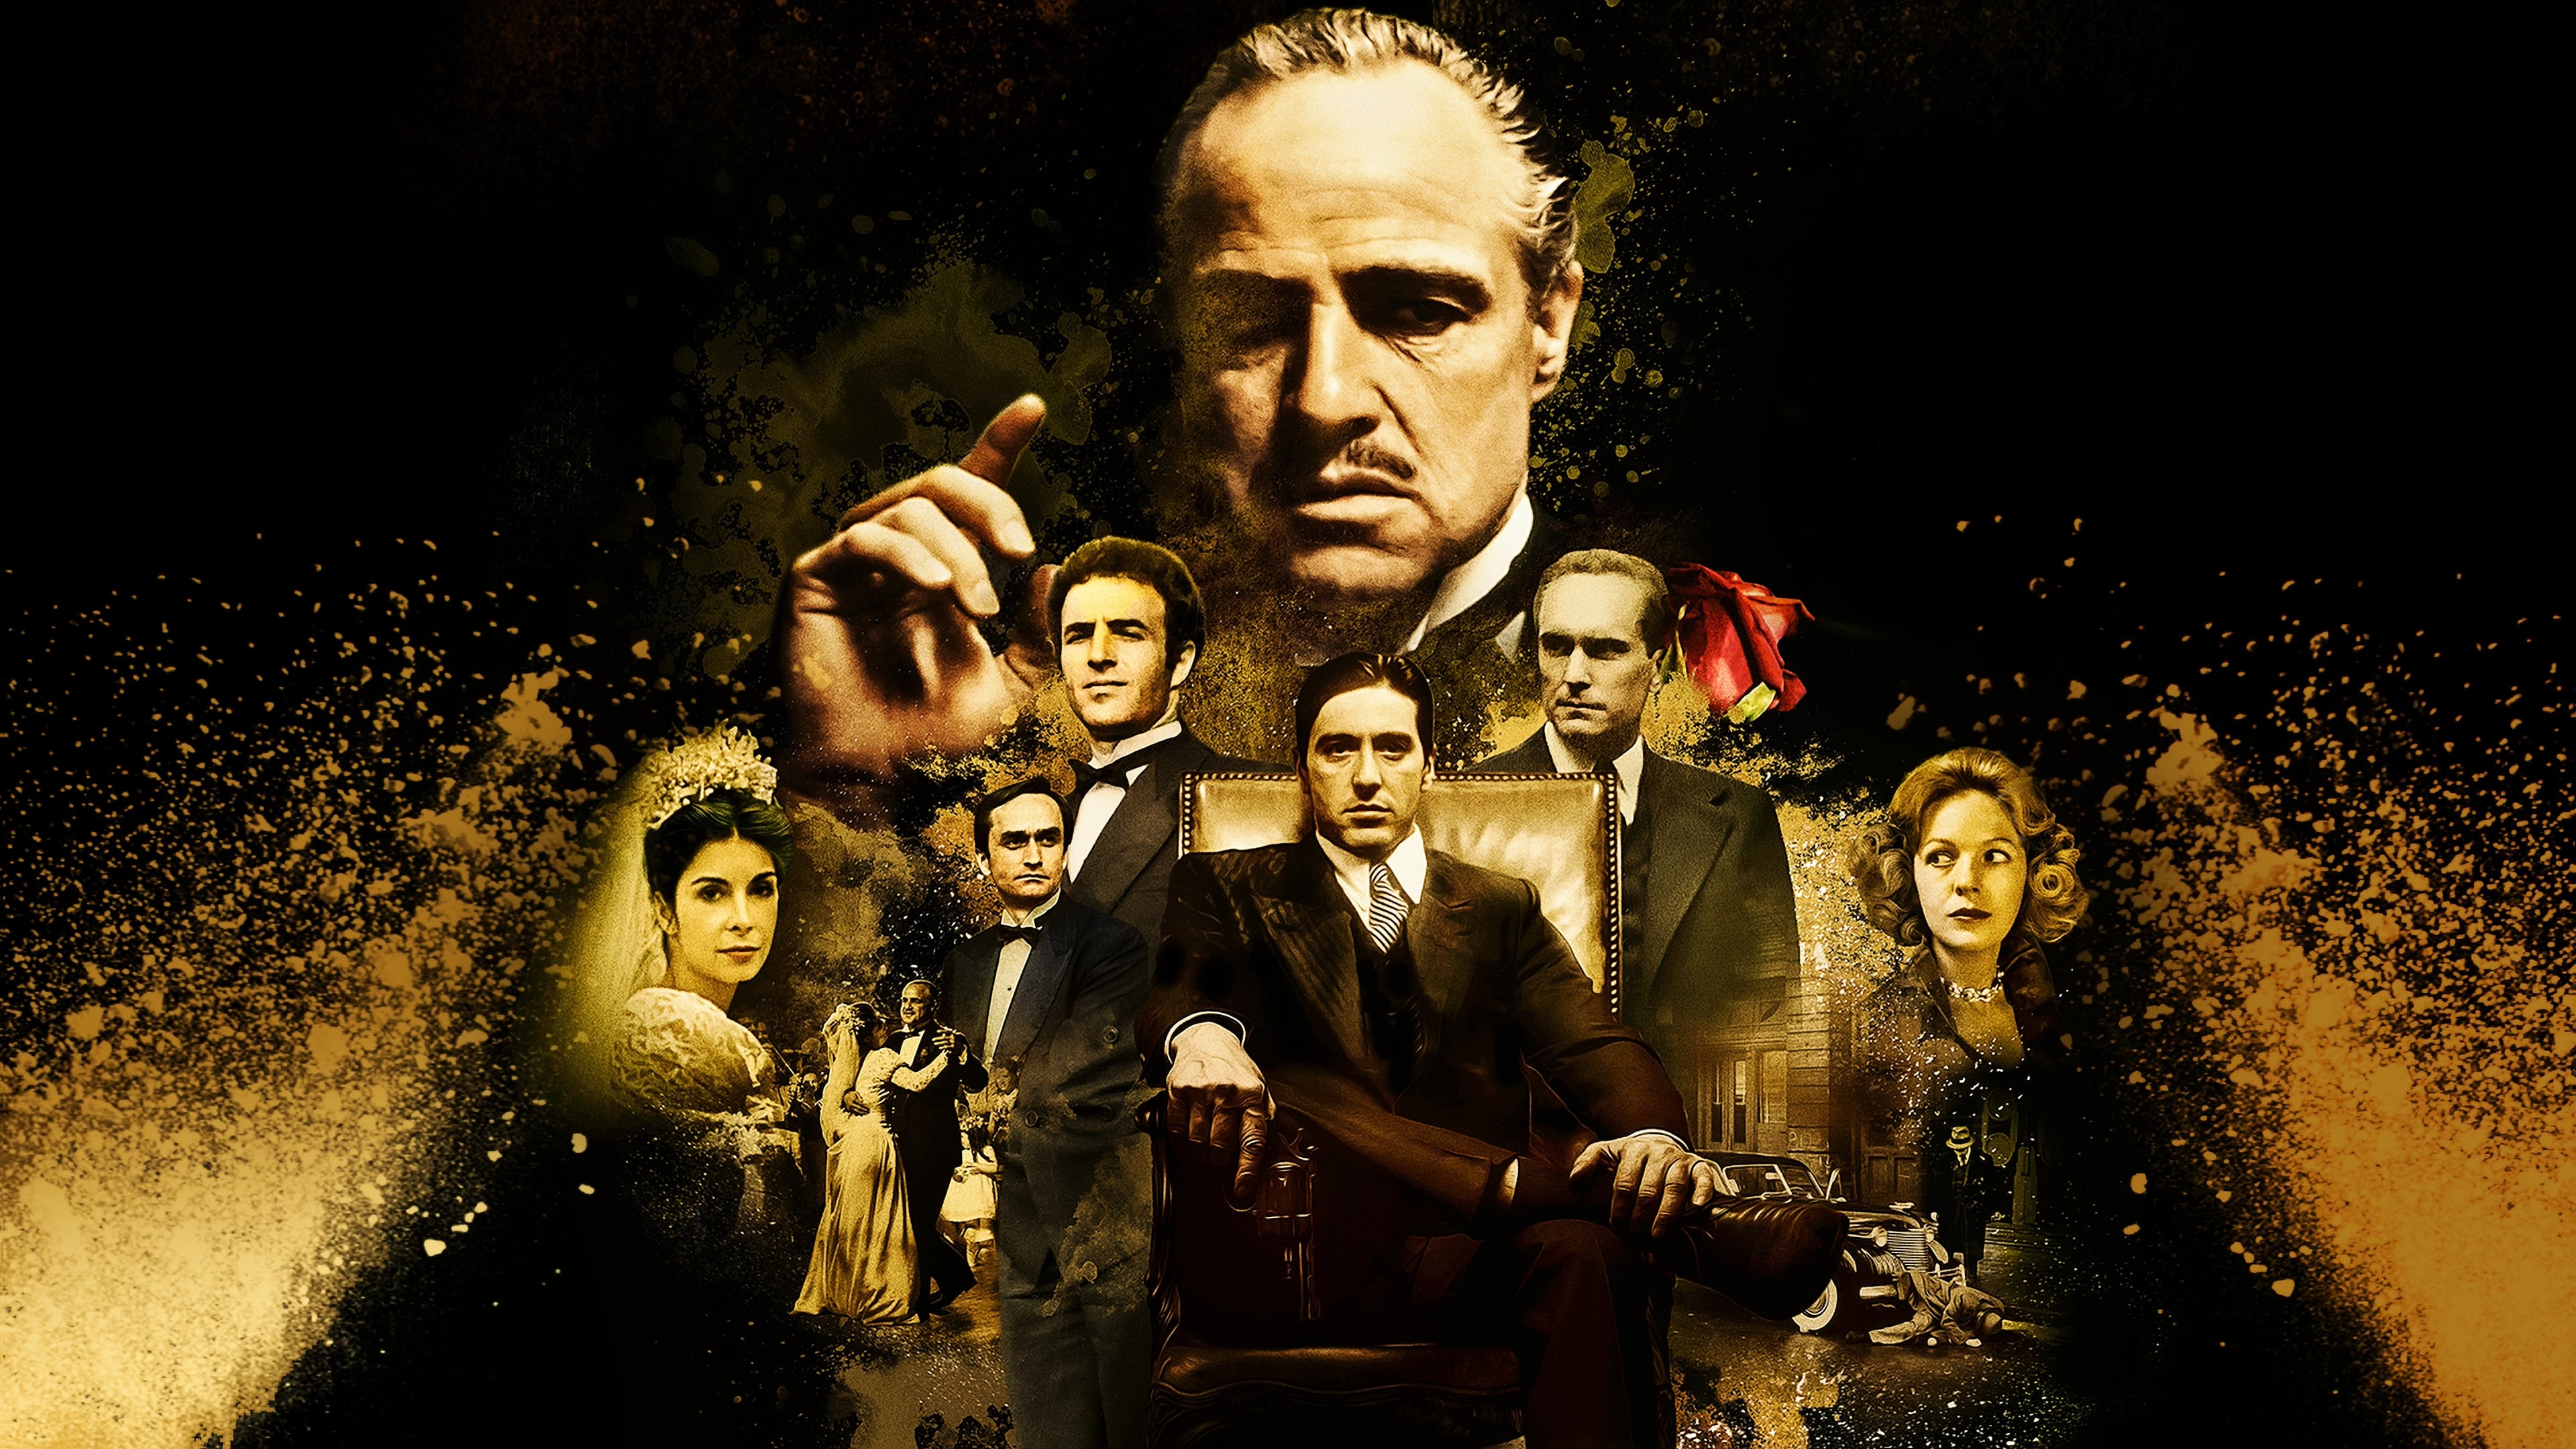 Poster Phim Bố Già (The Godfather)